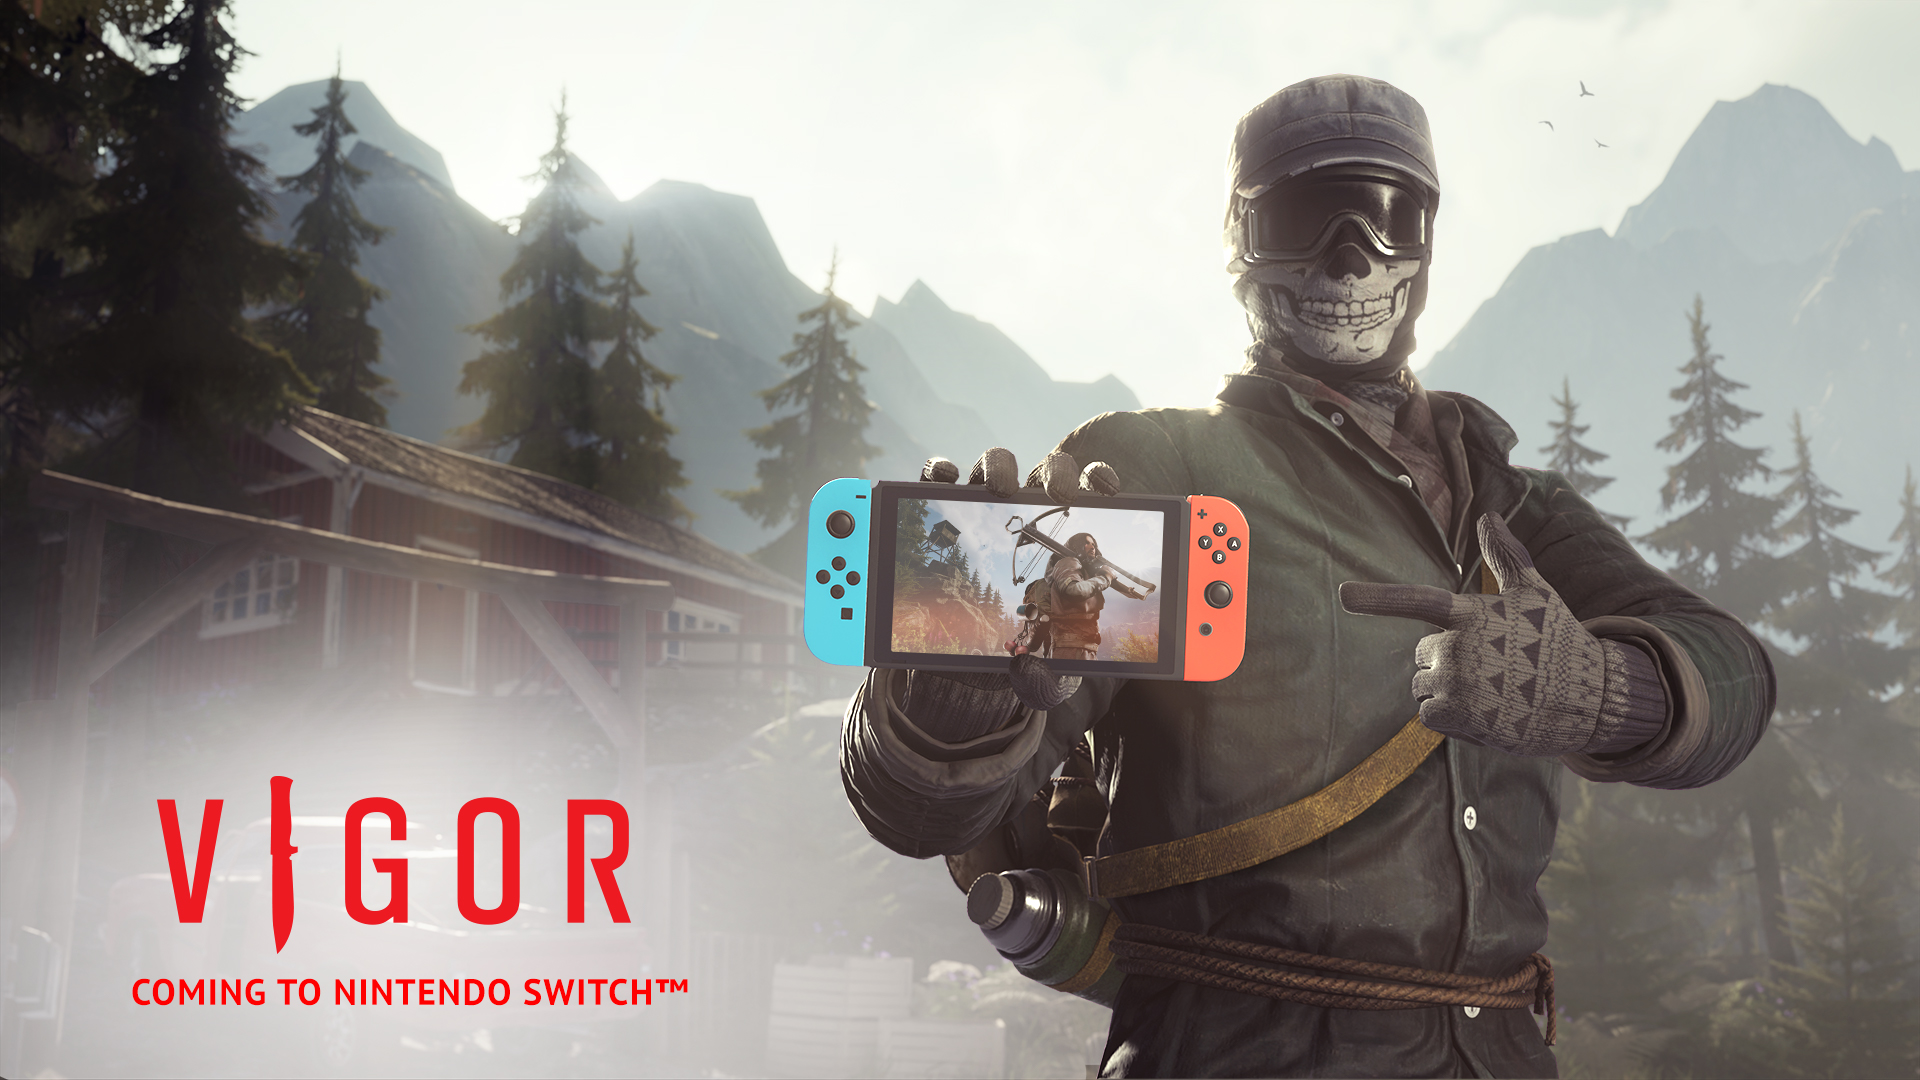 Vigor is Coming to Nintendo Switch™, Blog